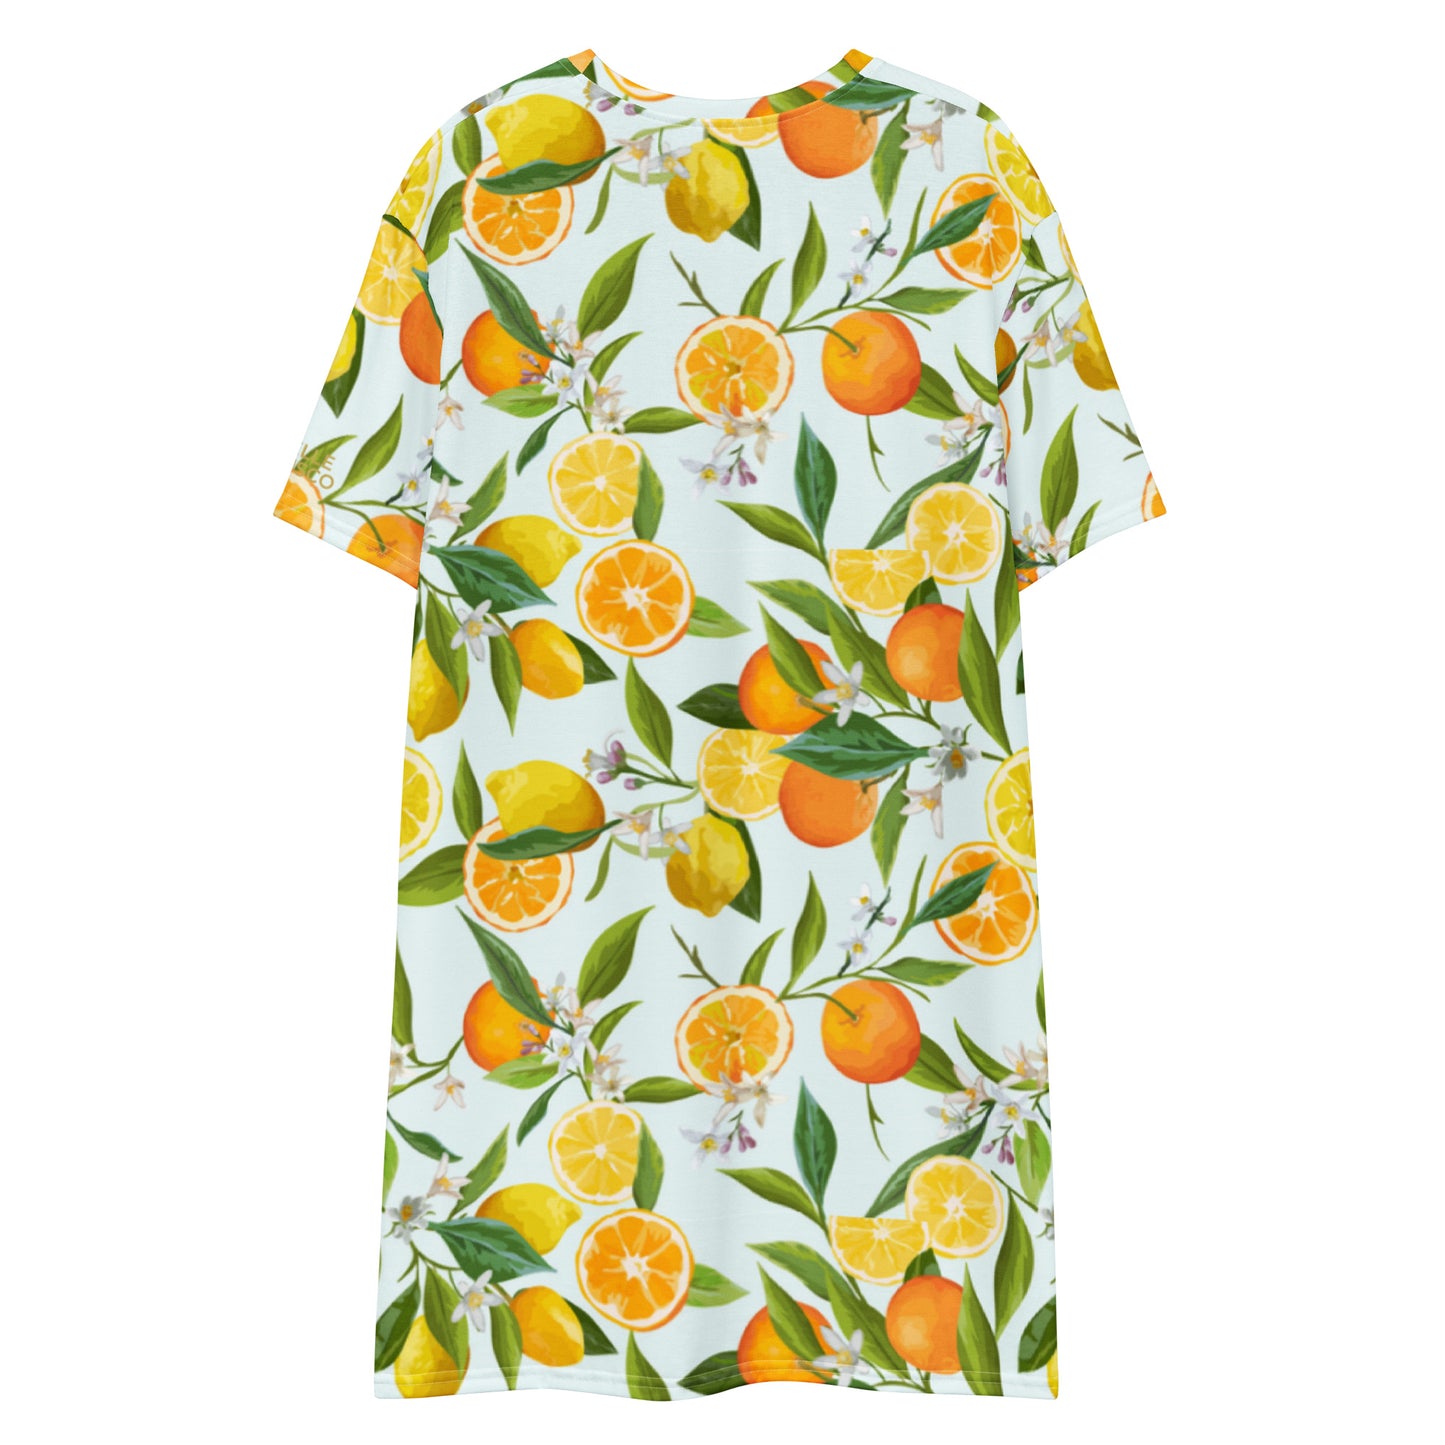 Citrus T-shirt Dress